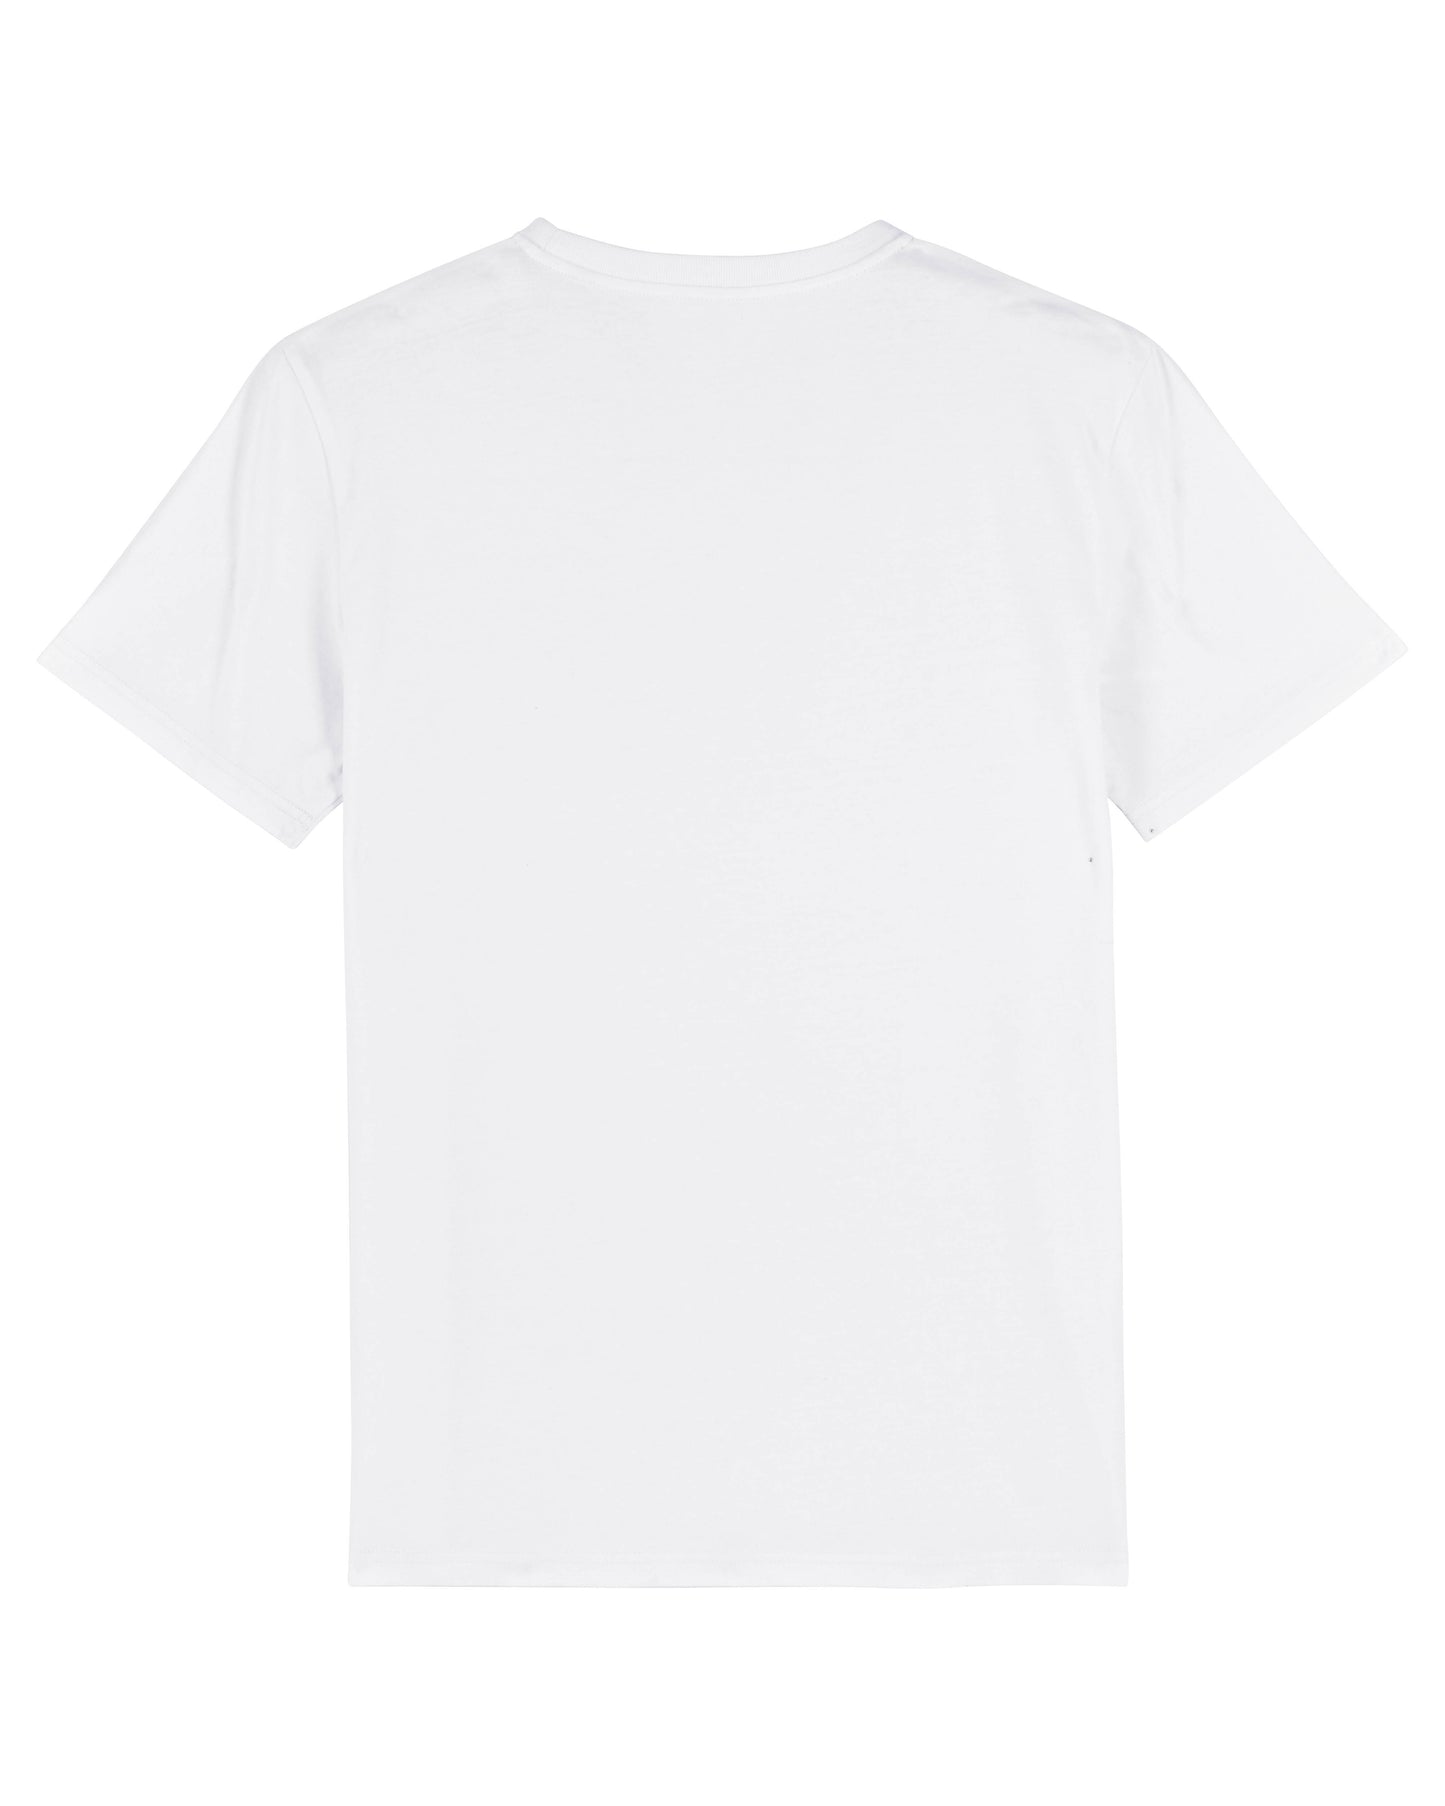 PIERRE BERGER- 100% Organic Cotton Unisex T-Shirt Black White Simple Typhography